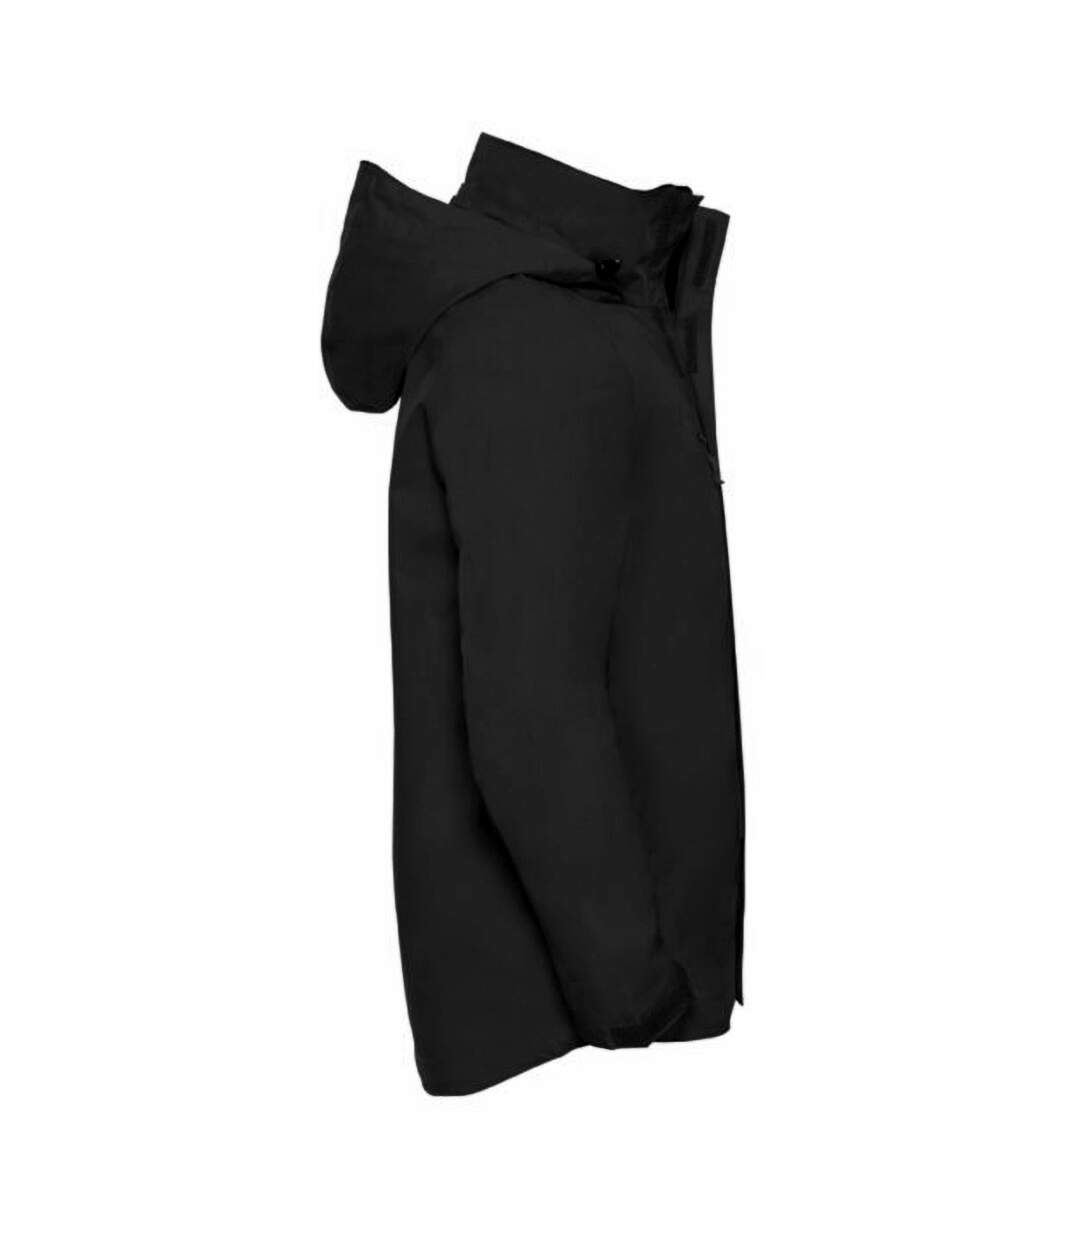 Jerzees Colors Mens Premium Hydraplus 2000 Water Resistant Jacket (Black) - UTBC564